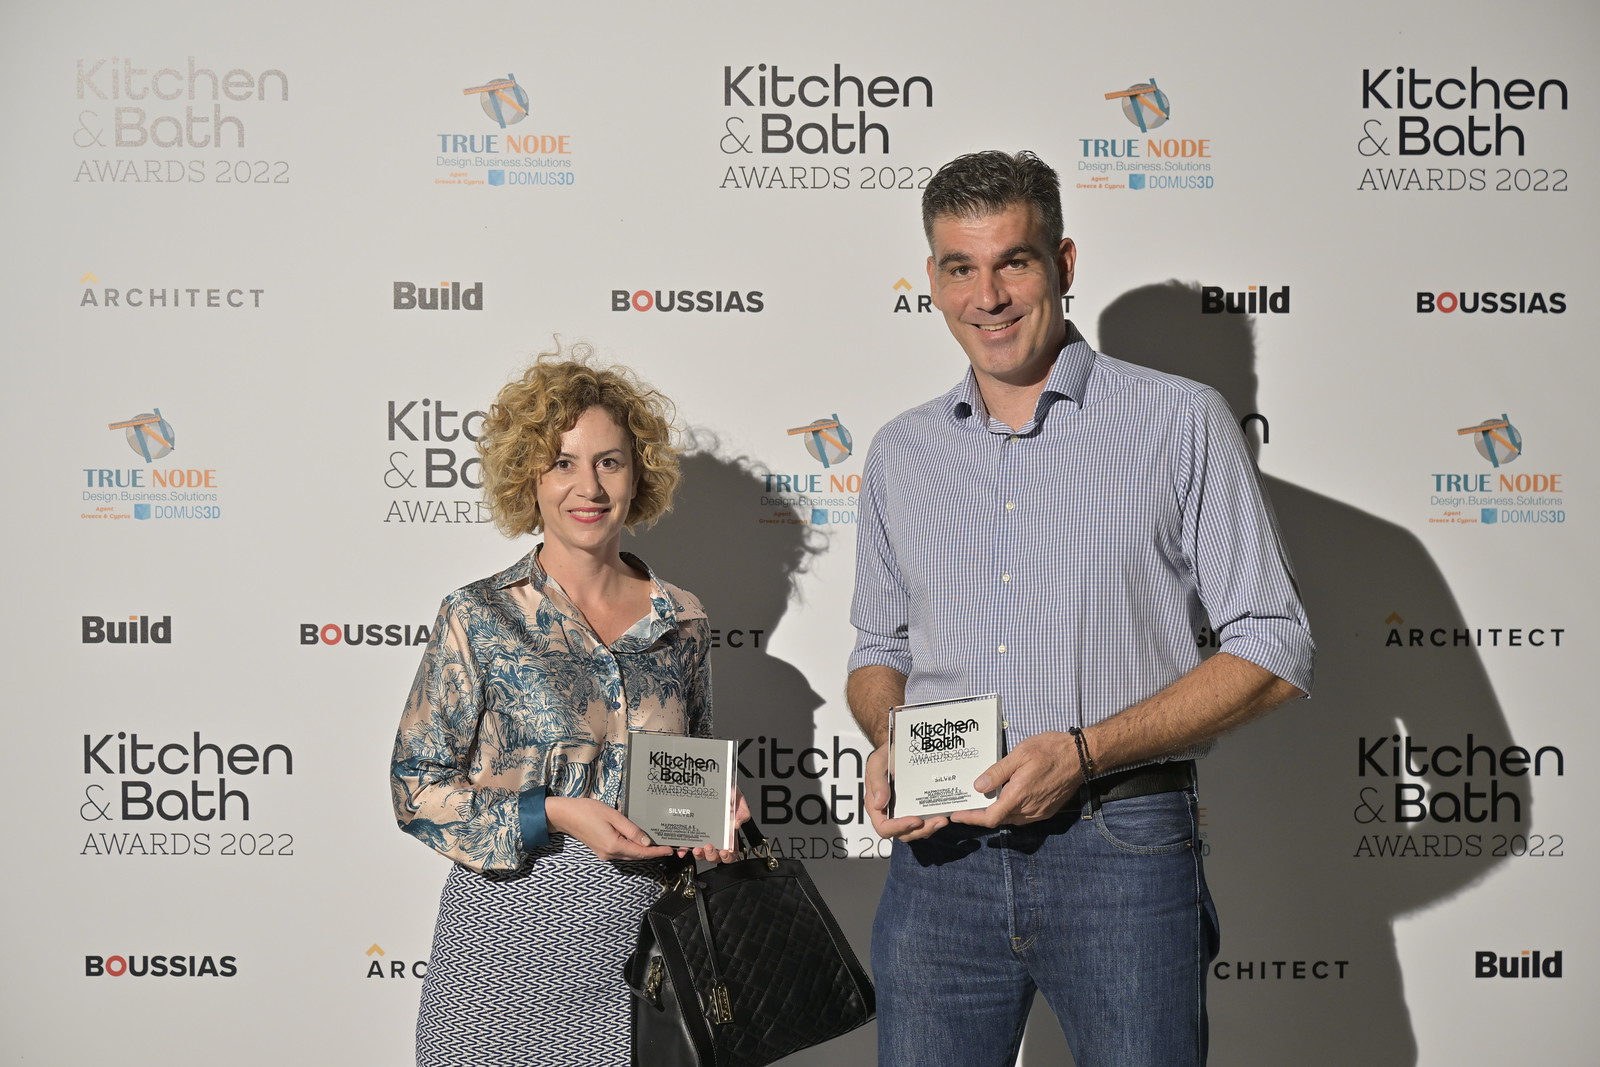 Kitchen & Bath Awards 2022